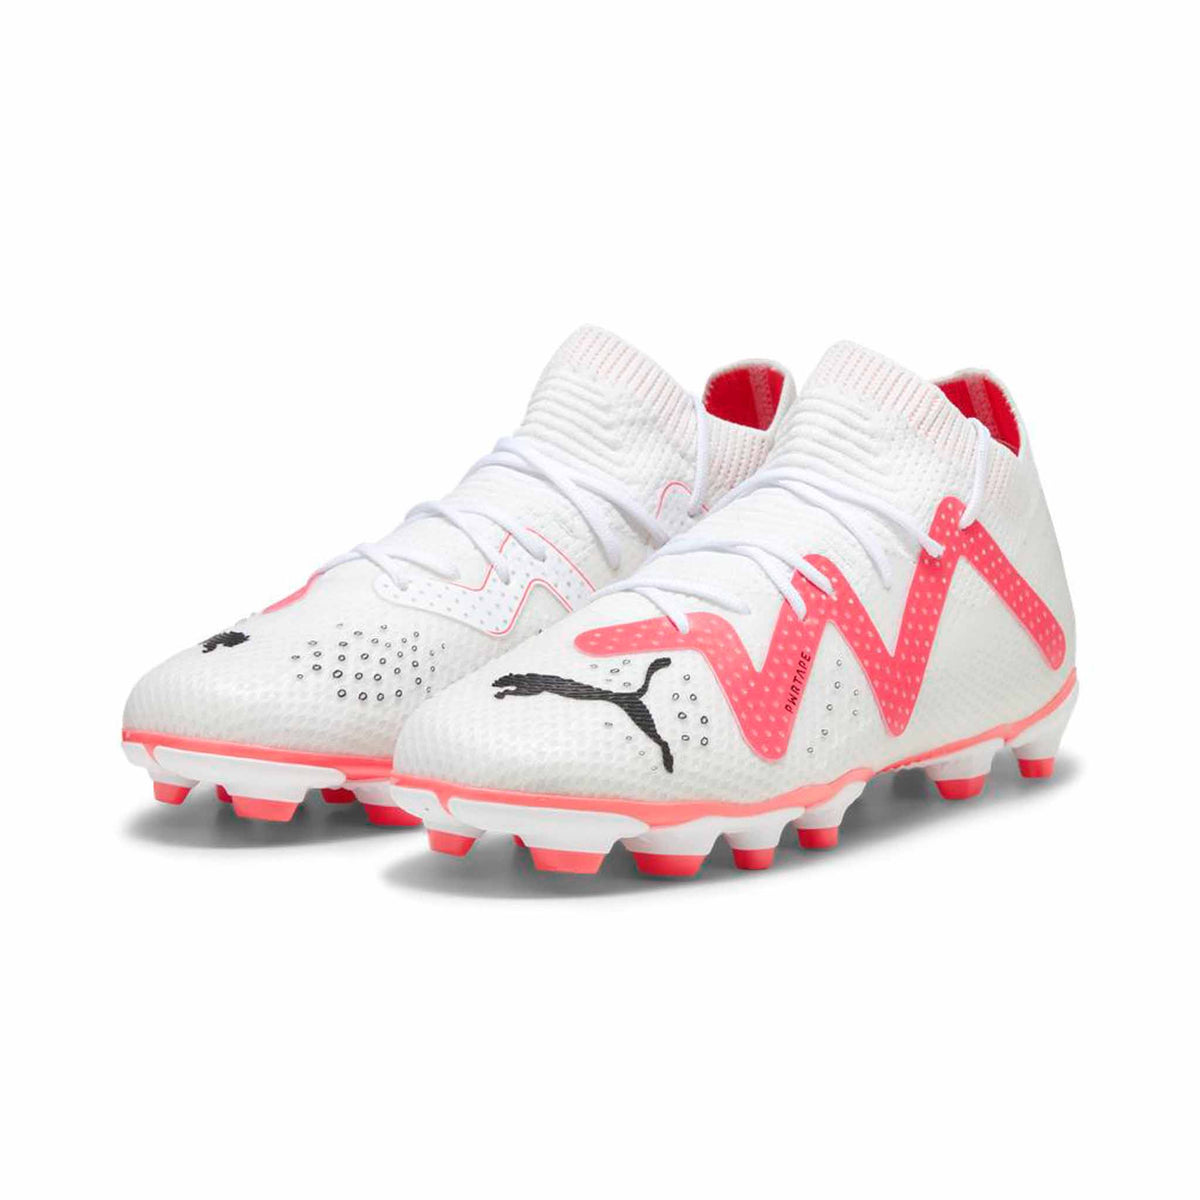 Puma Future Pro FG/AG chaussures de soccer à crampons junior - Puma White / Fire Orchid